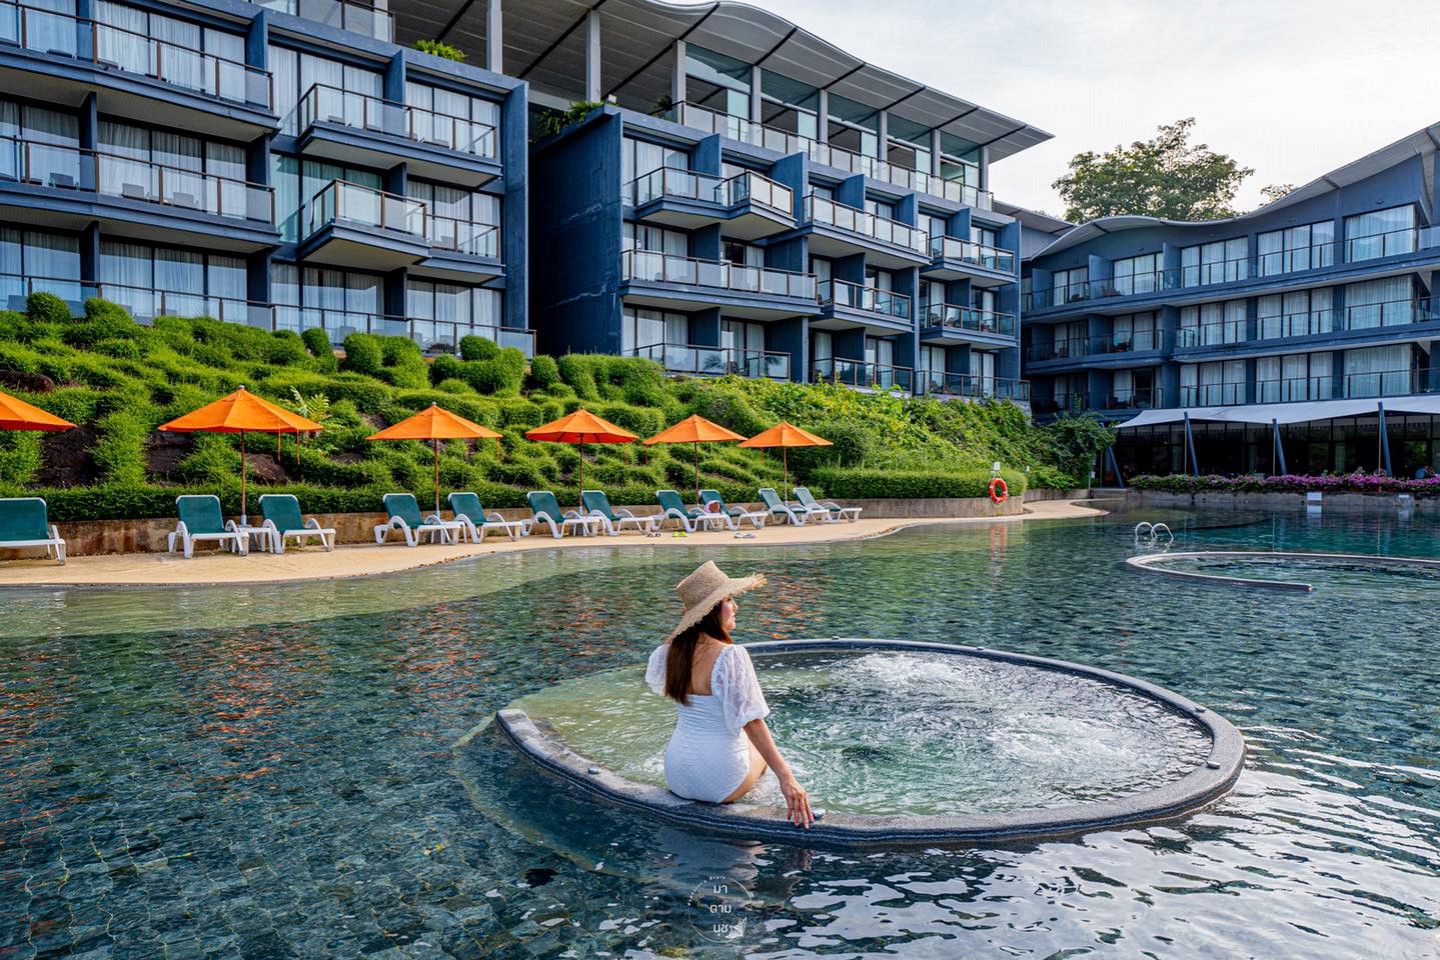 Beyond Resorts and Kata Group Thailand